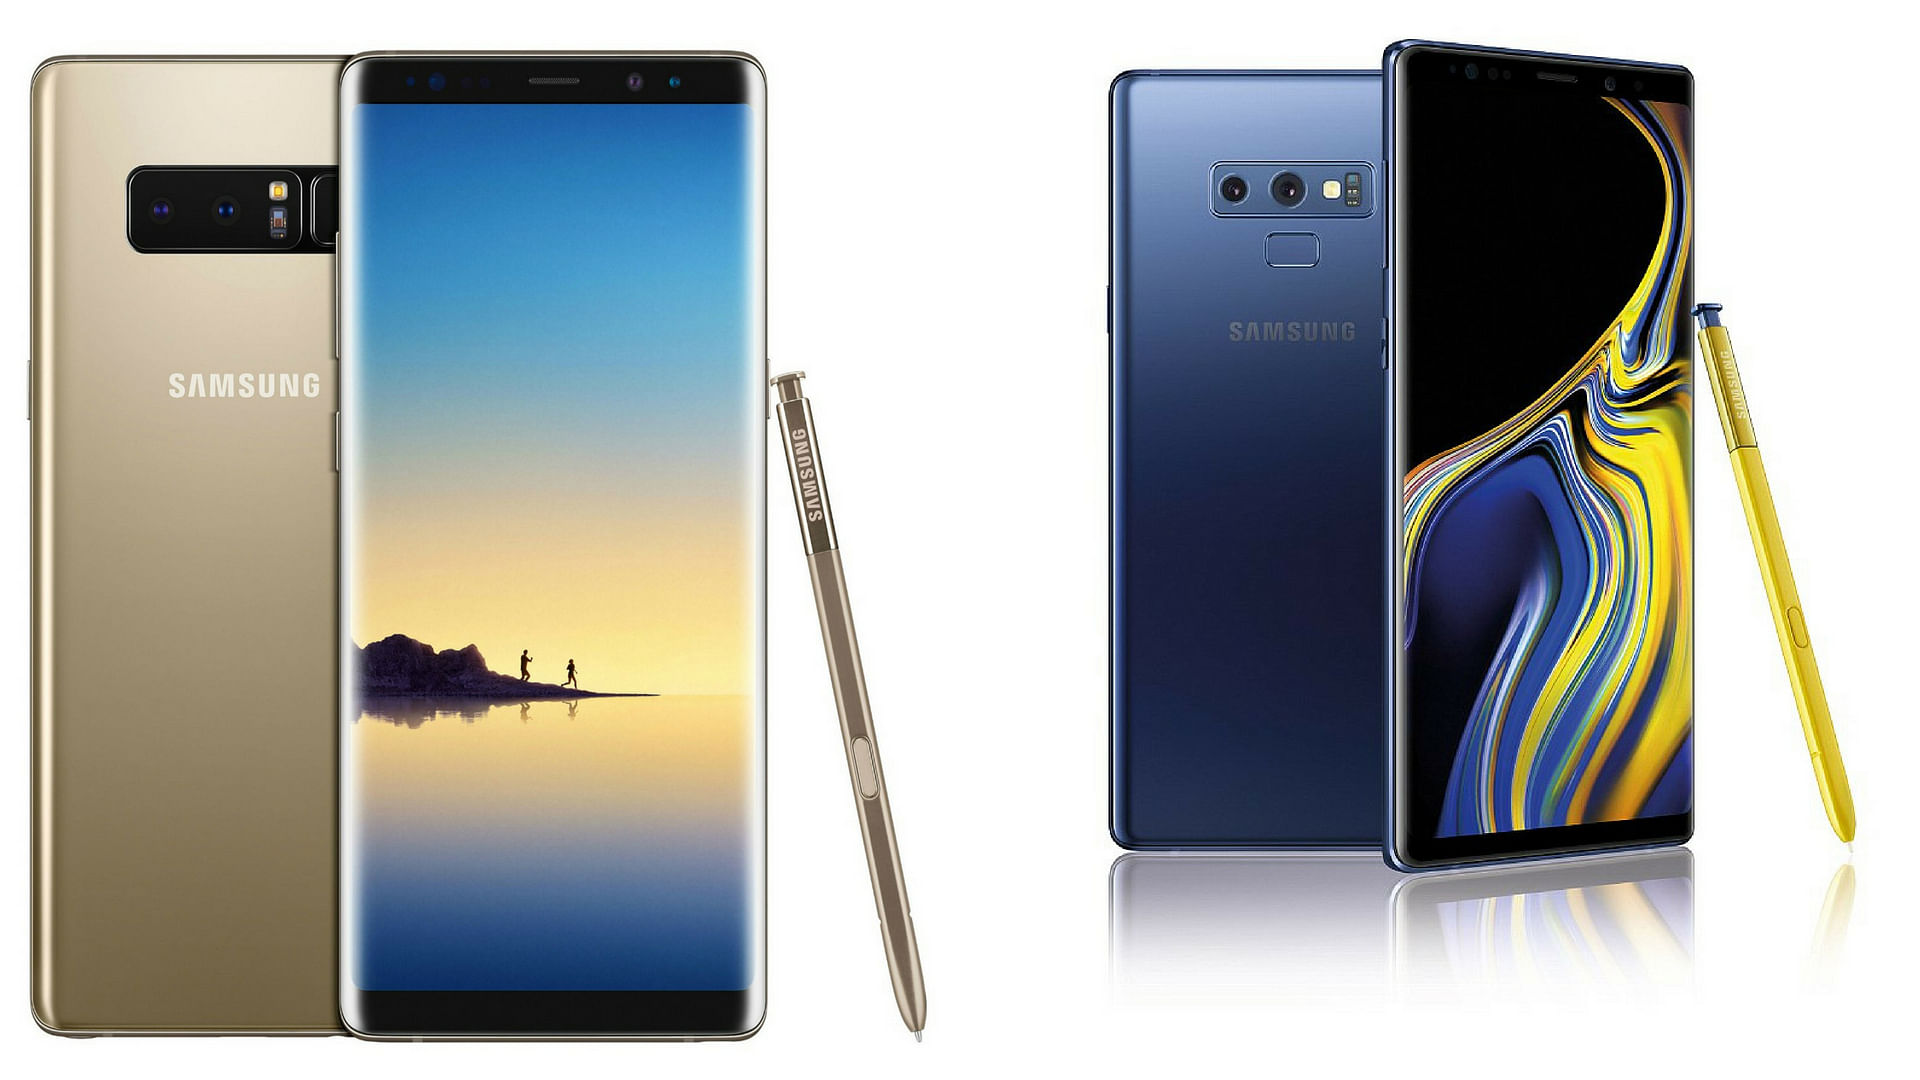 Samsung Galaxy Note 8 (left), Samsung Galaxy Note 9 (right)